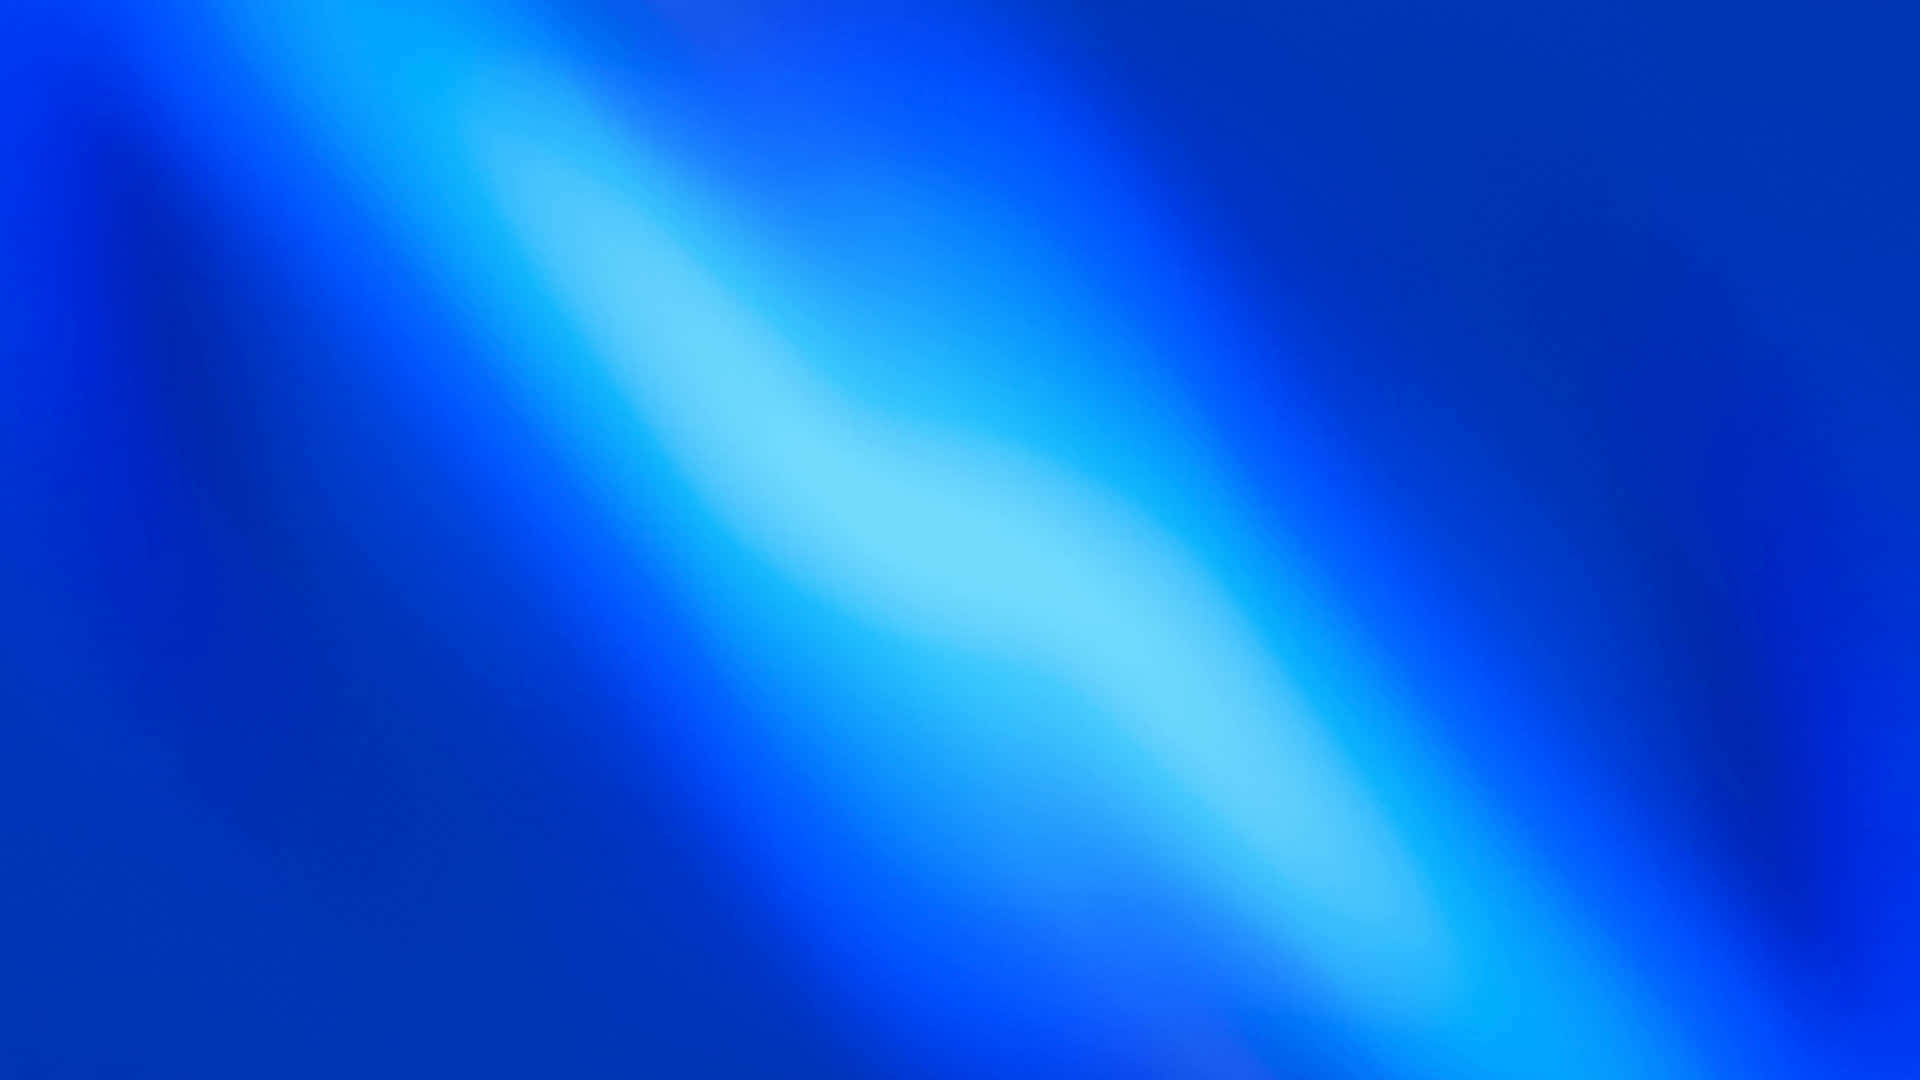 a blue background with a light streak